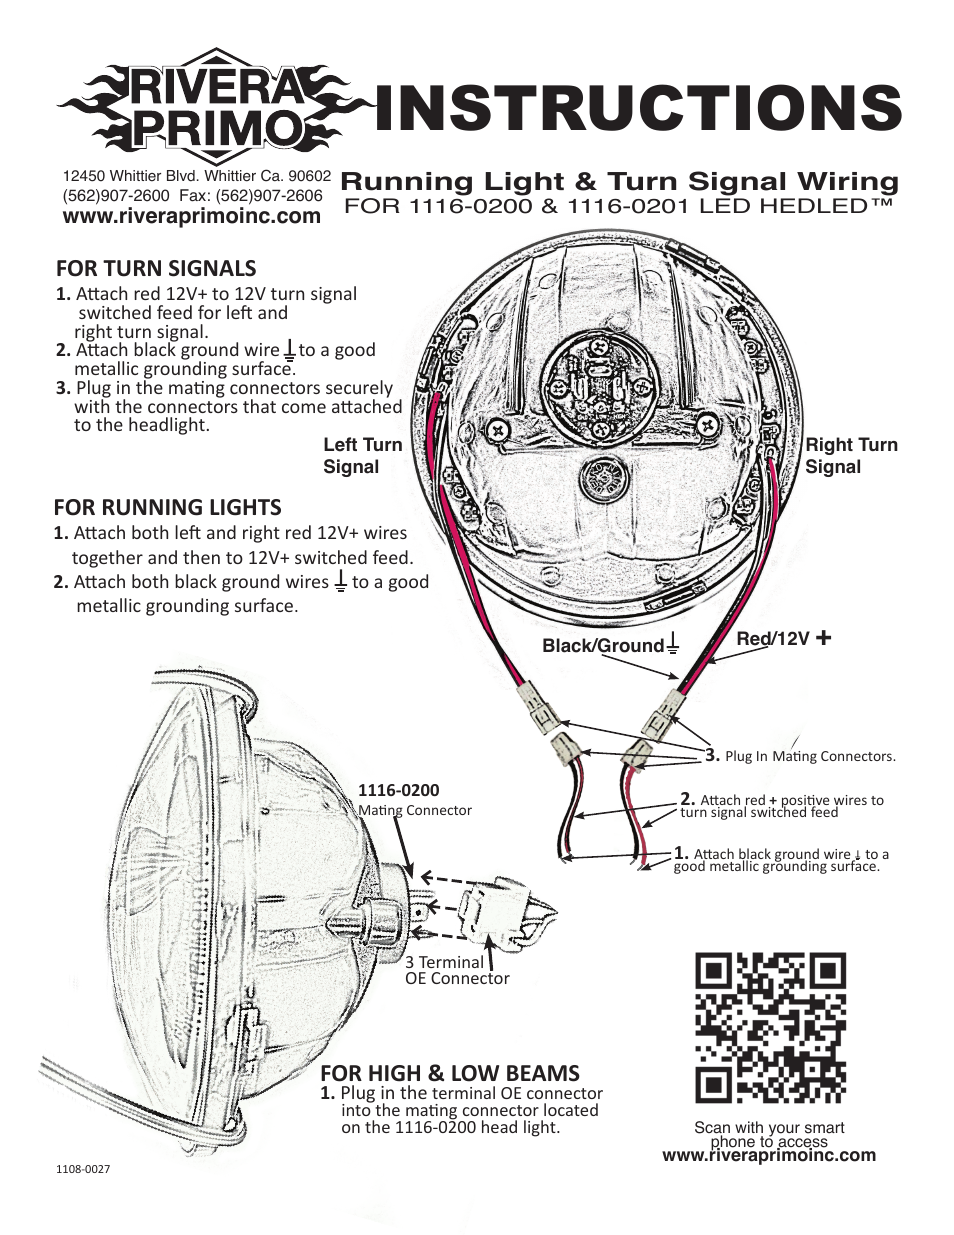 Running Light & Turn Signal Wiring for 1116-0201LED HedLED